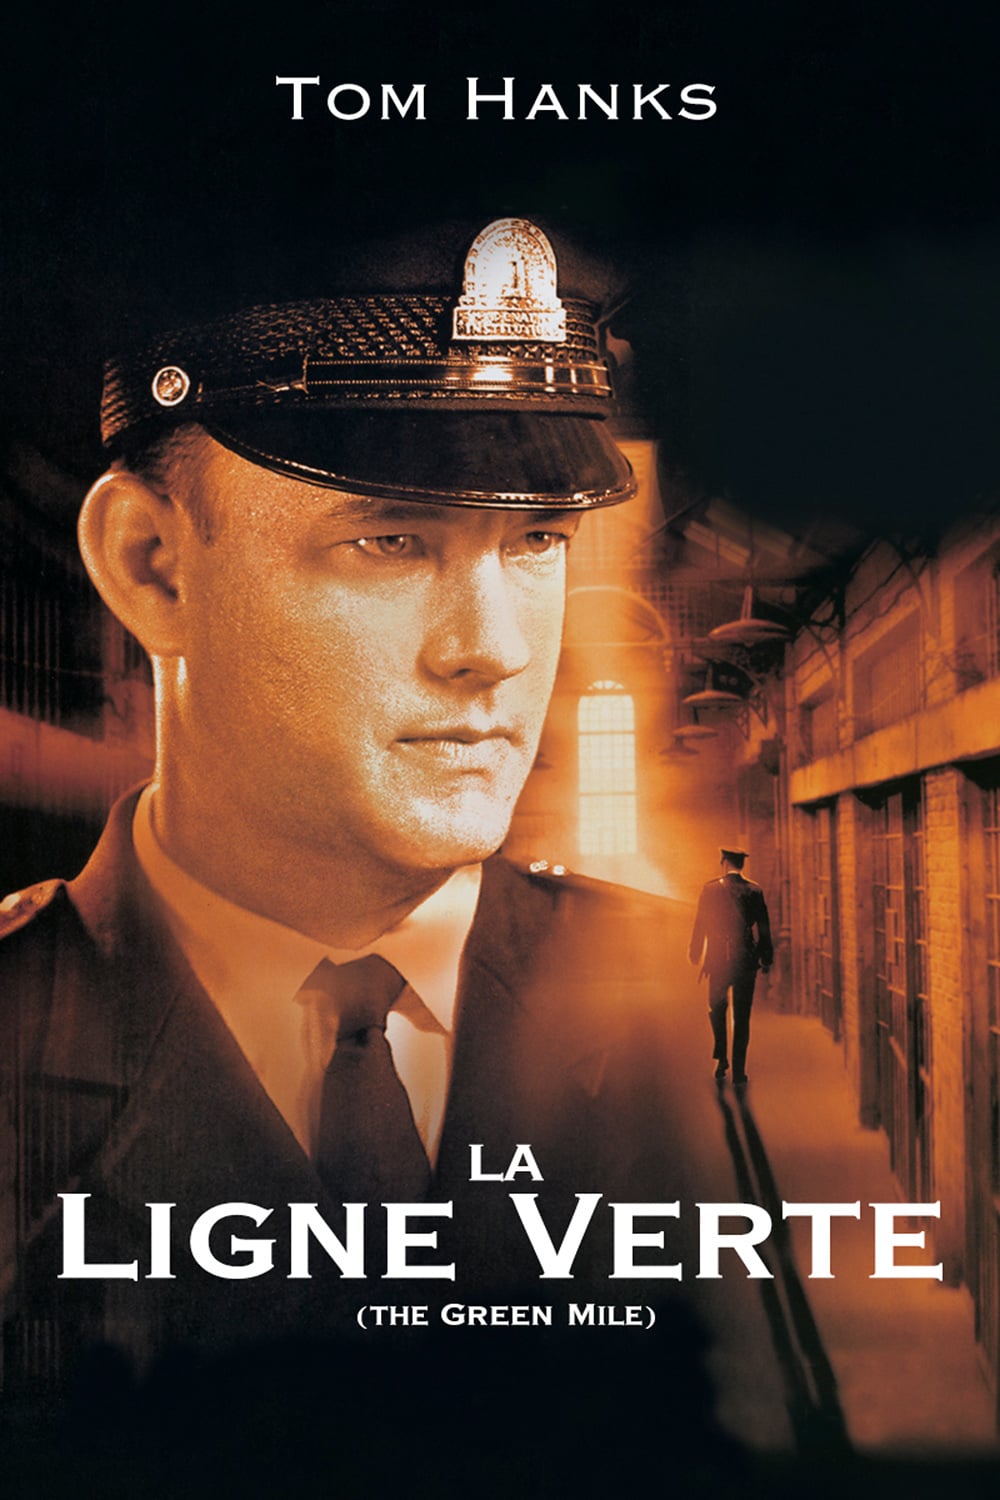 Affiche du film "La Ligne verte"